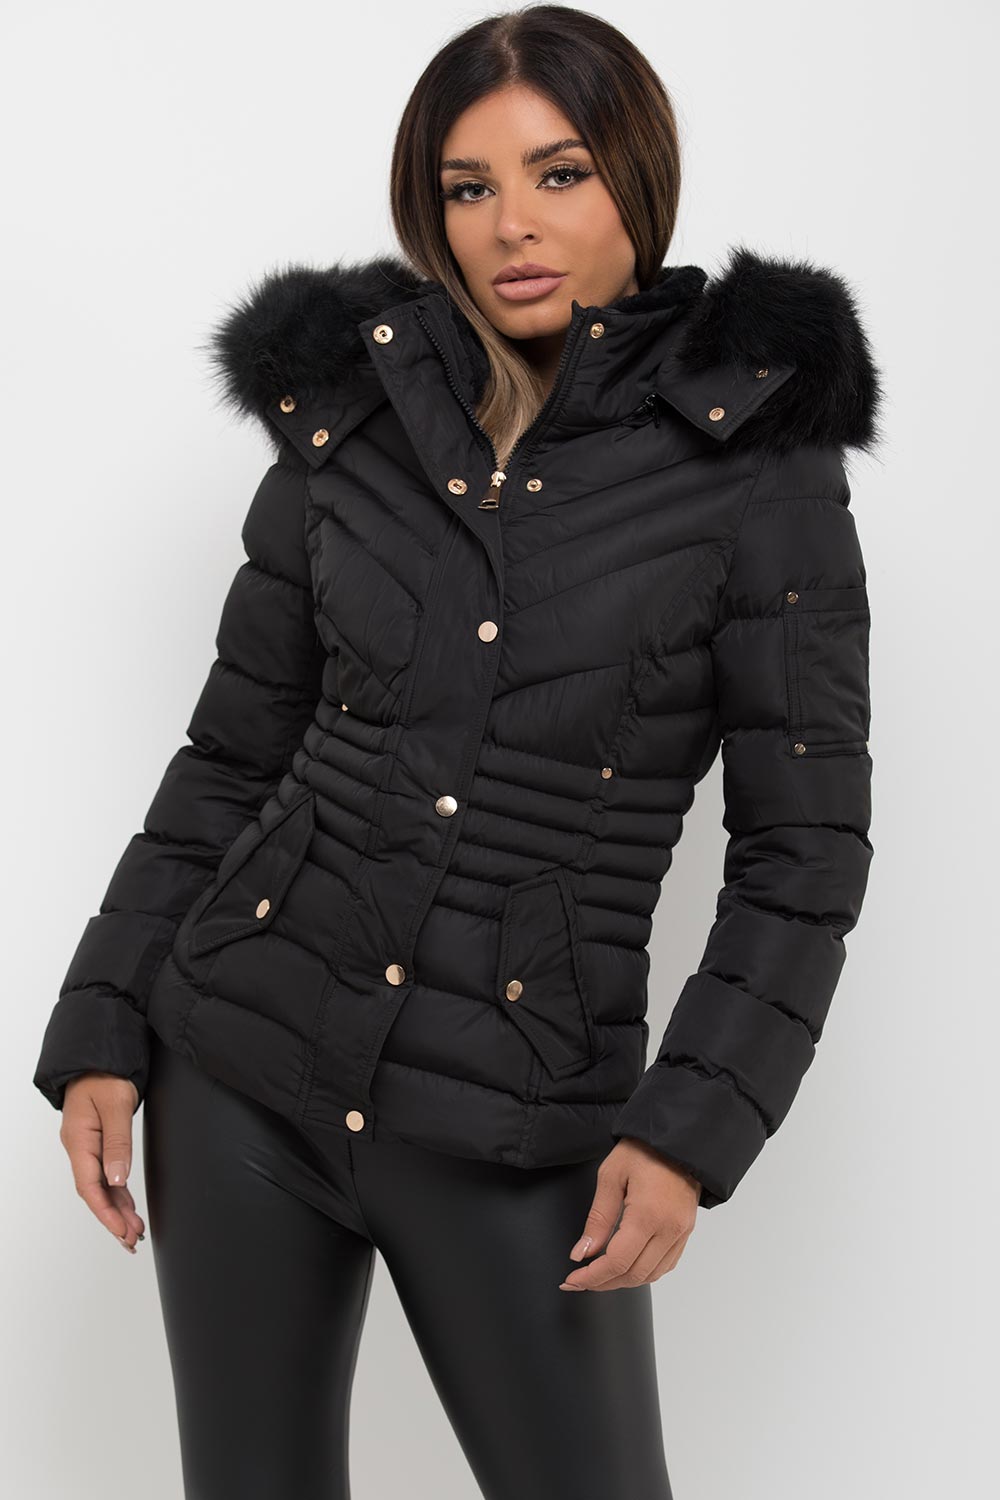 Womens Black Puffer Coat With Fur Hood – Styledup.co.uk